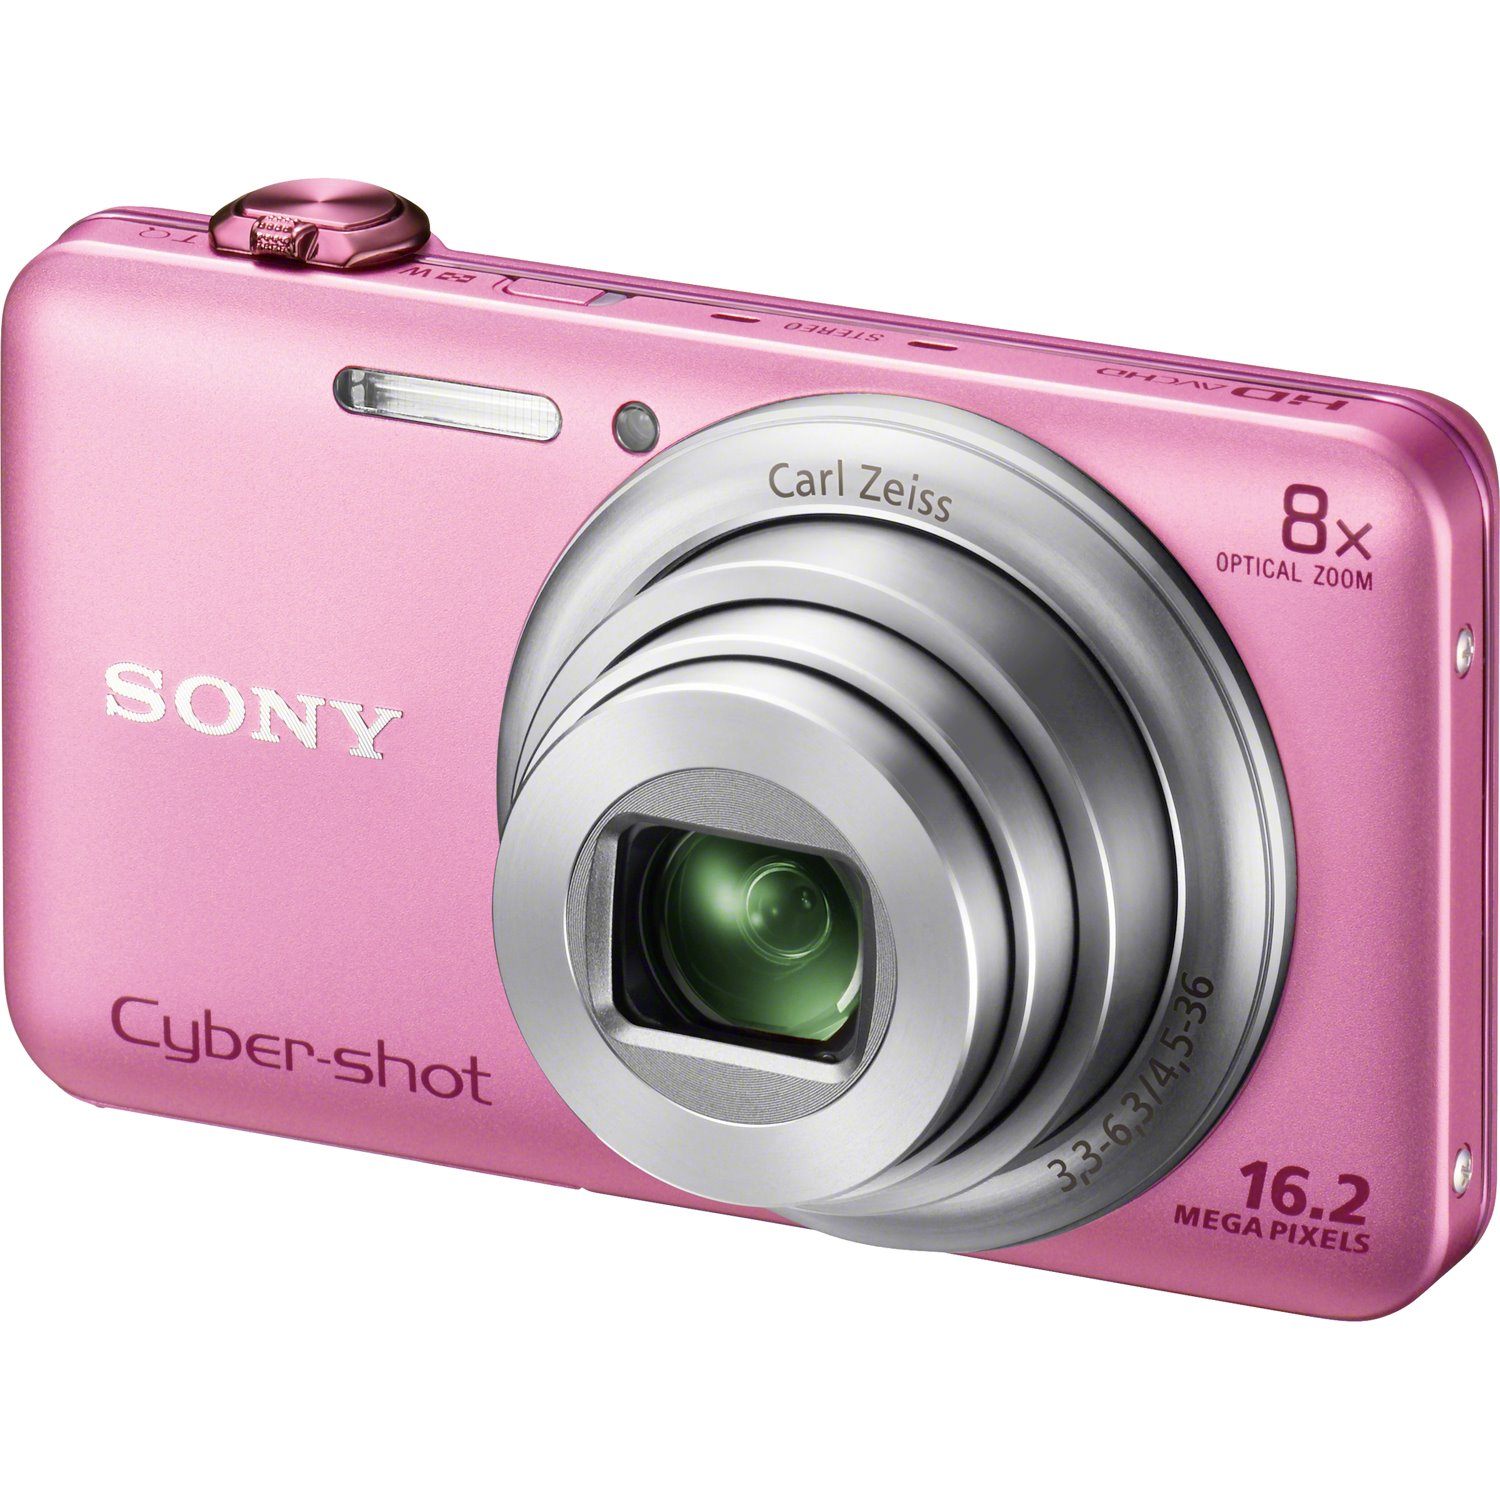 Sony Cyber-shot DSC-WX60 16.2 Megapixel Compact Camera - Pink